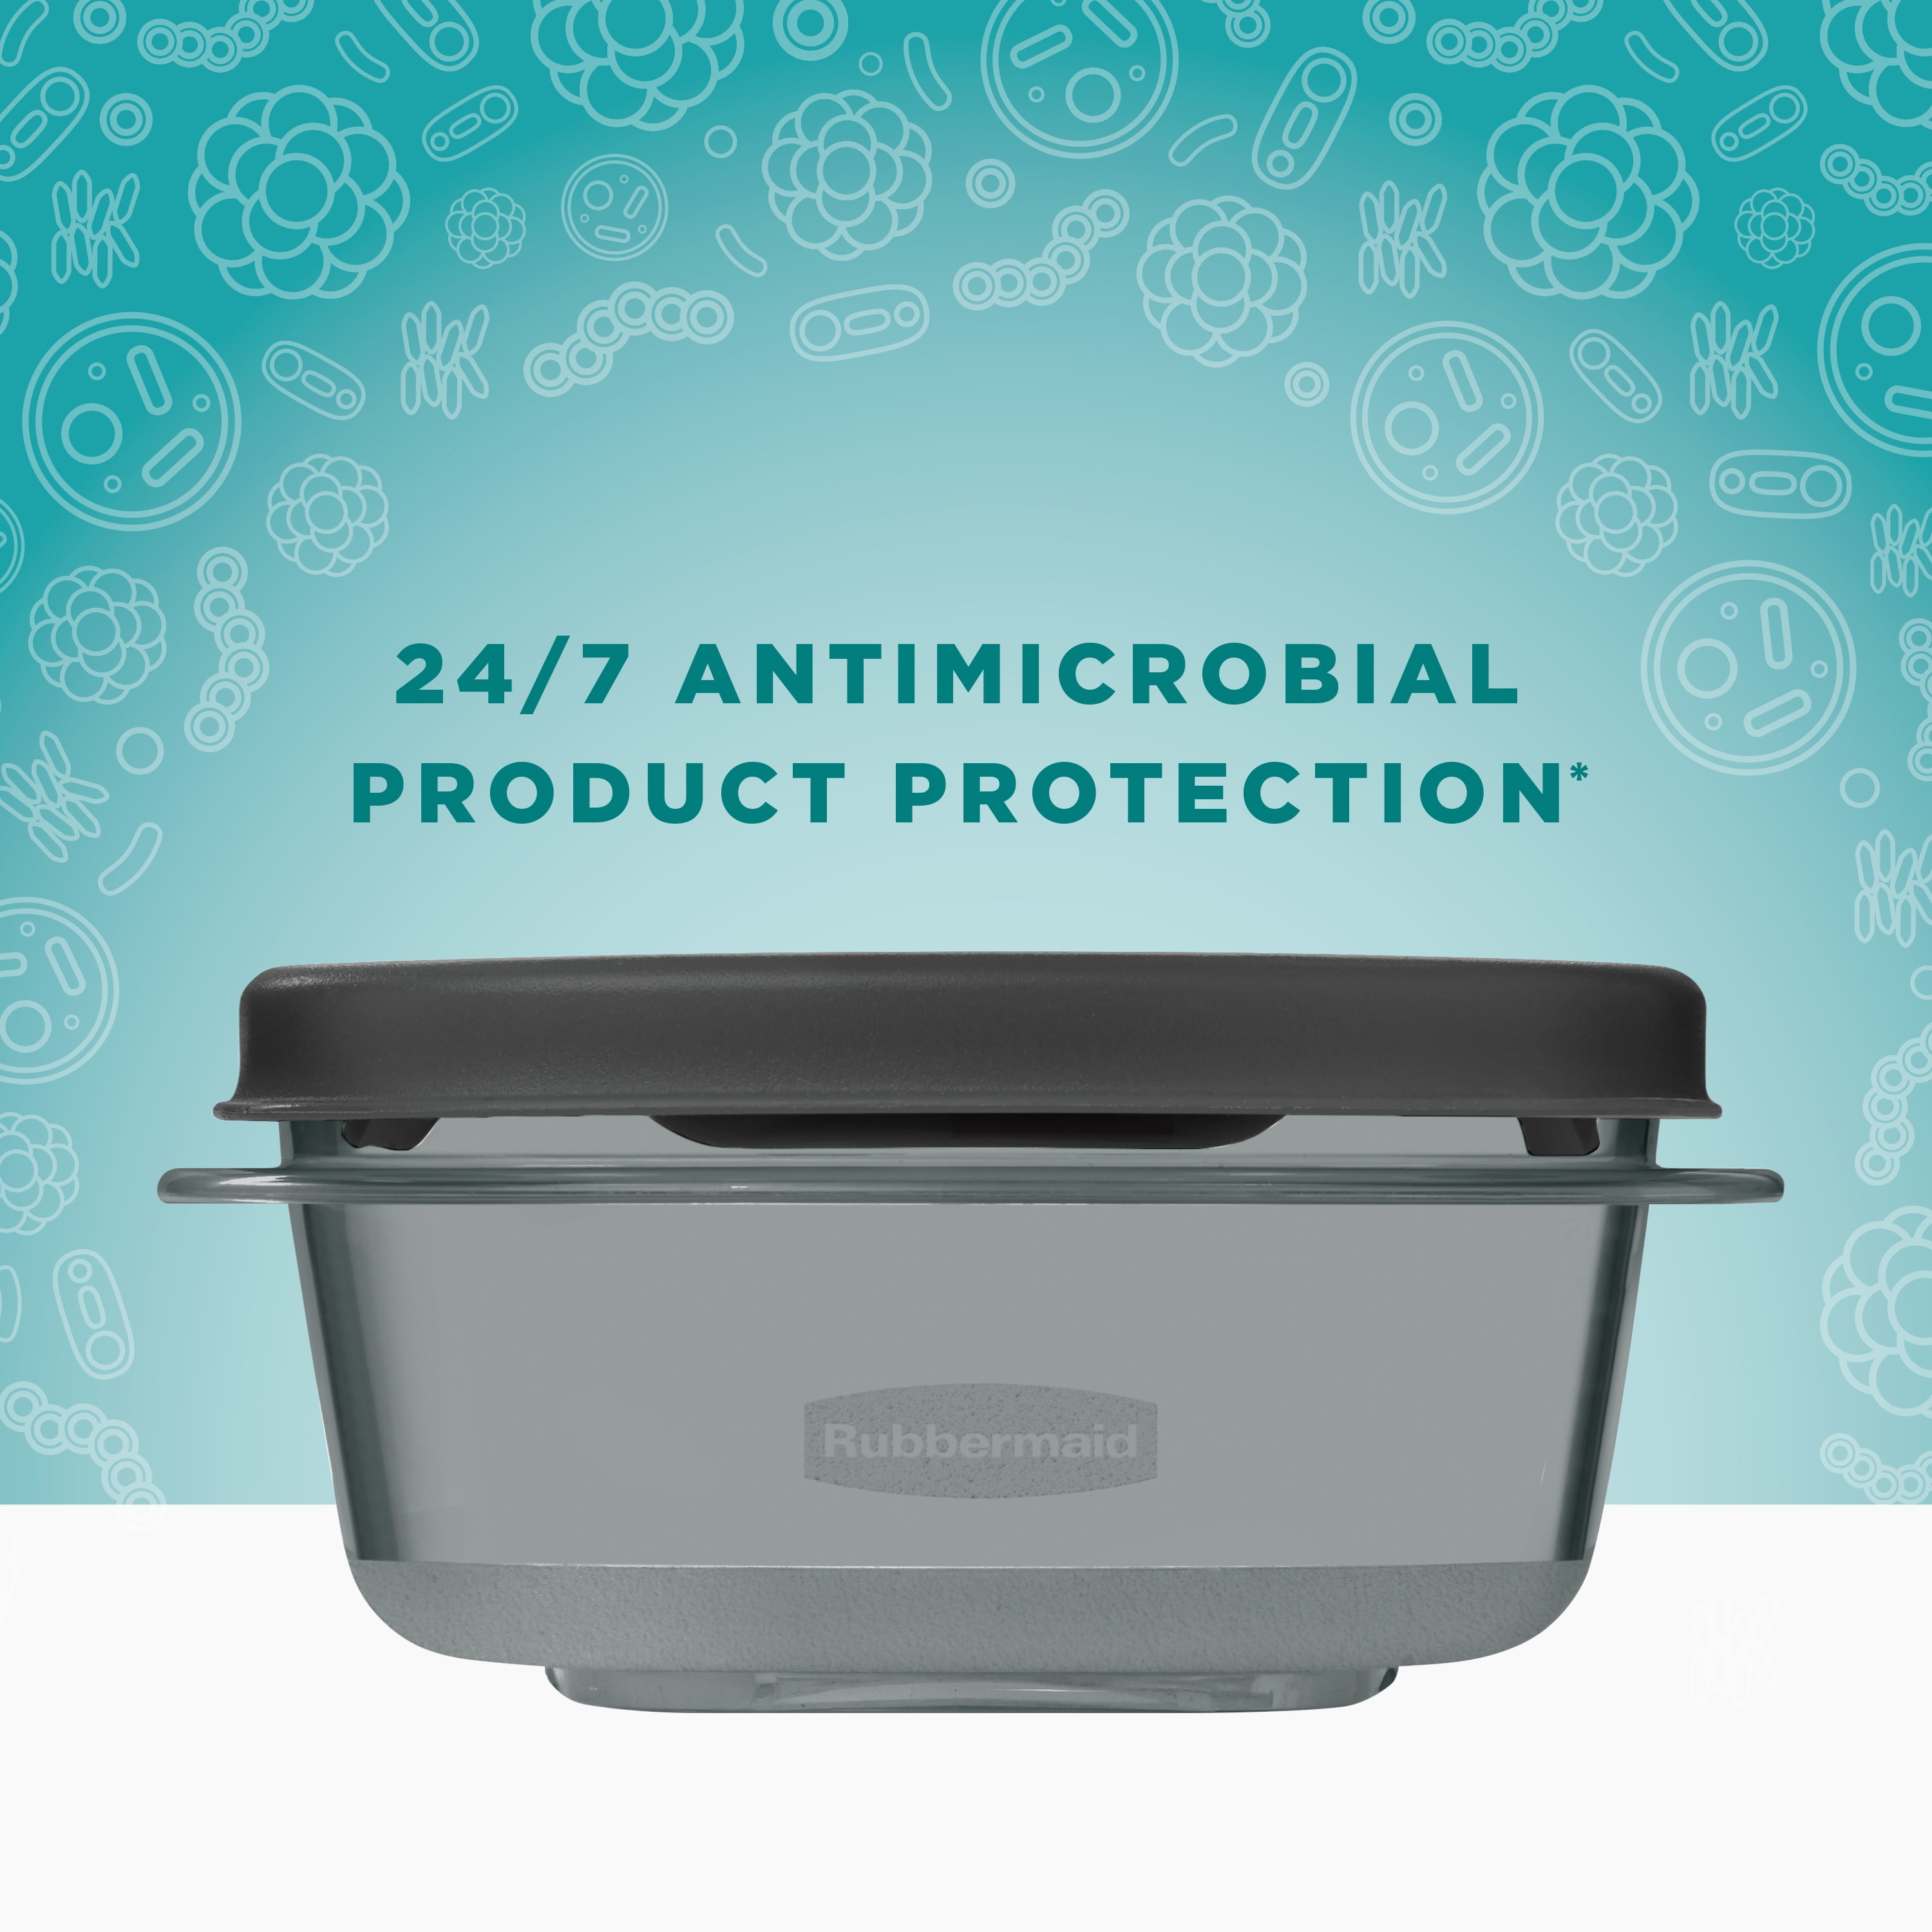 Rubbermaid EasyFindLids Antimicrobial 34pc Set